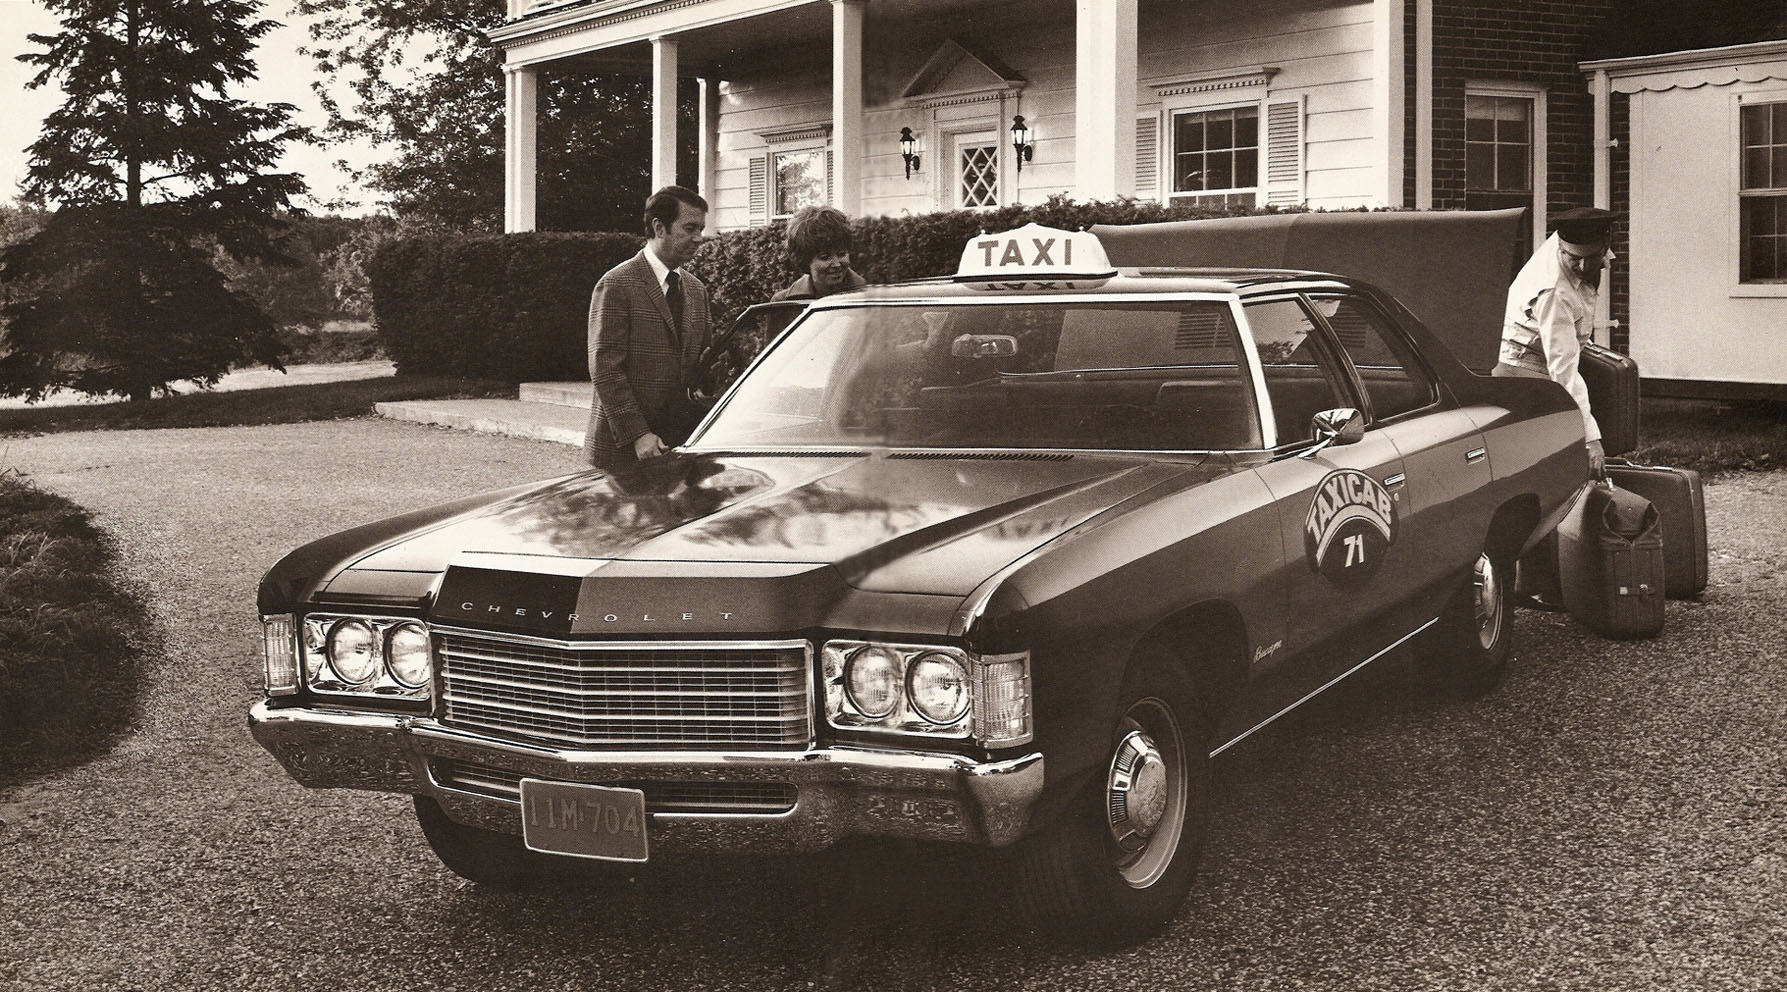 1971_Chevrolet_Taxi_Cab-04-05